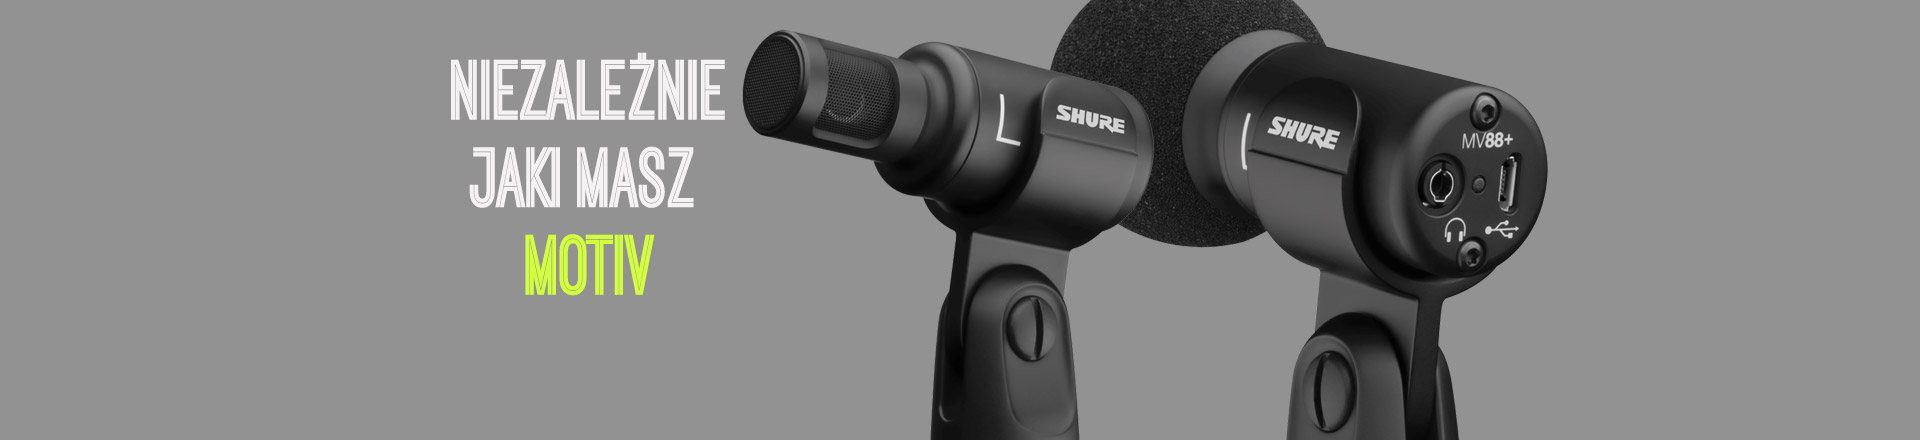 Shure MV88+: Ten mikrofon robi robotę! Podcast, instrument, wokal, perkusja?